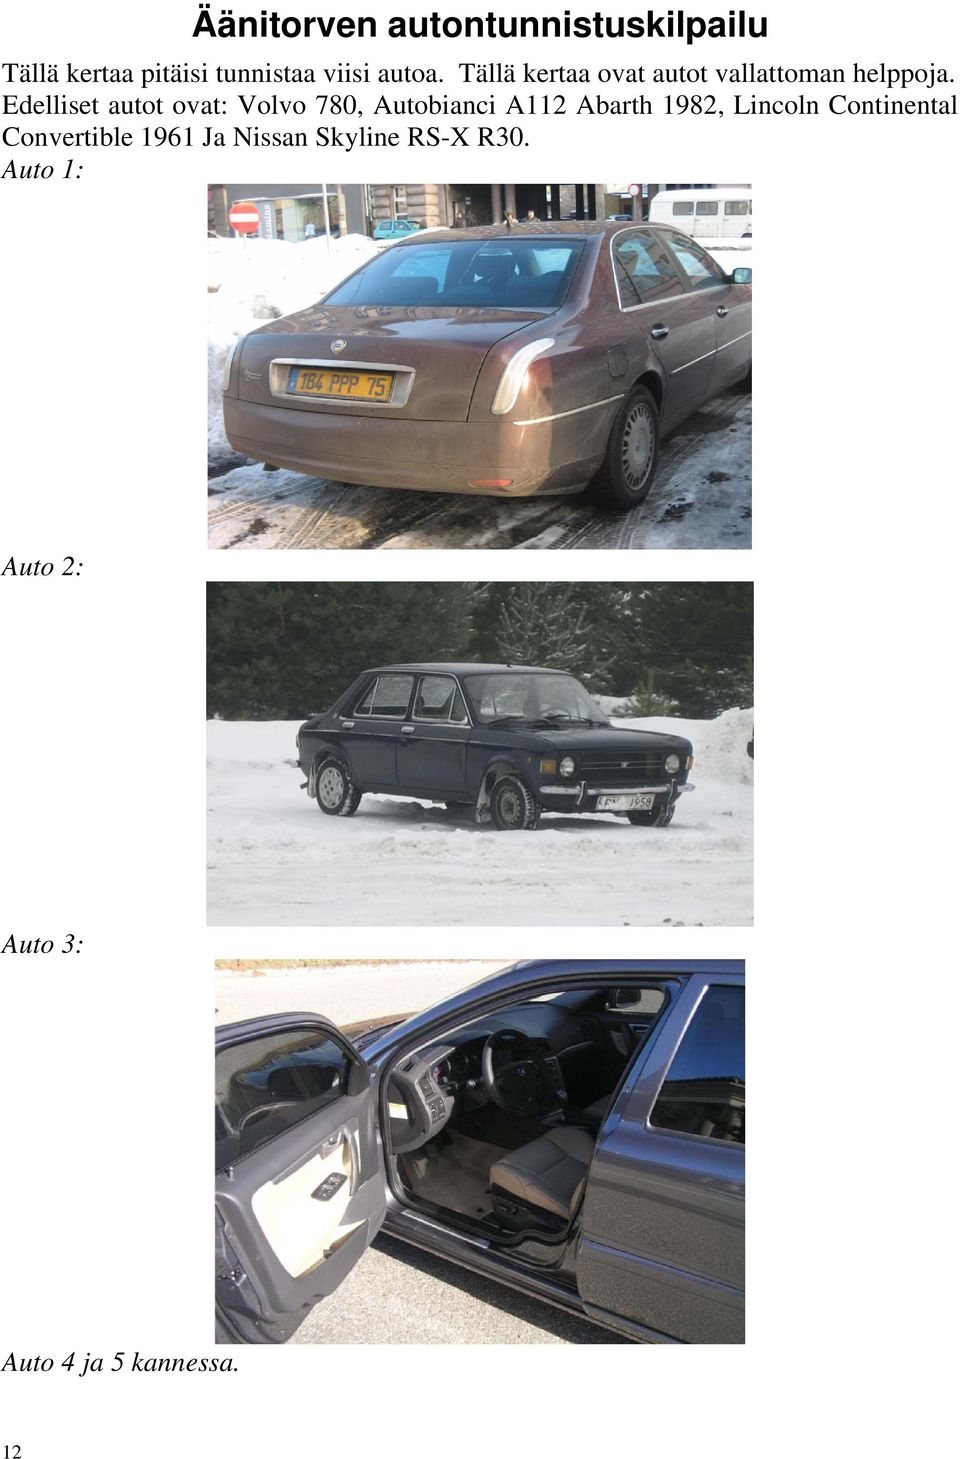 Edelliset autot ovat: Volvo 780, Autobianci A112 Abarth 1982, Lincoln